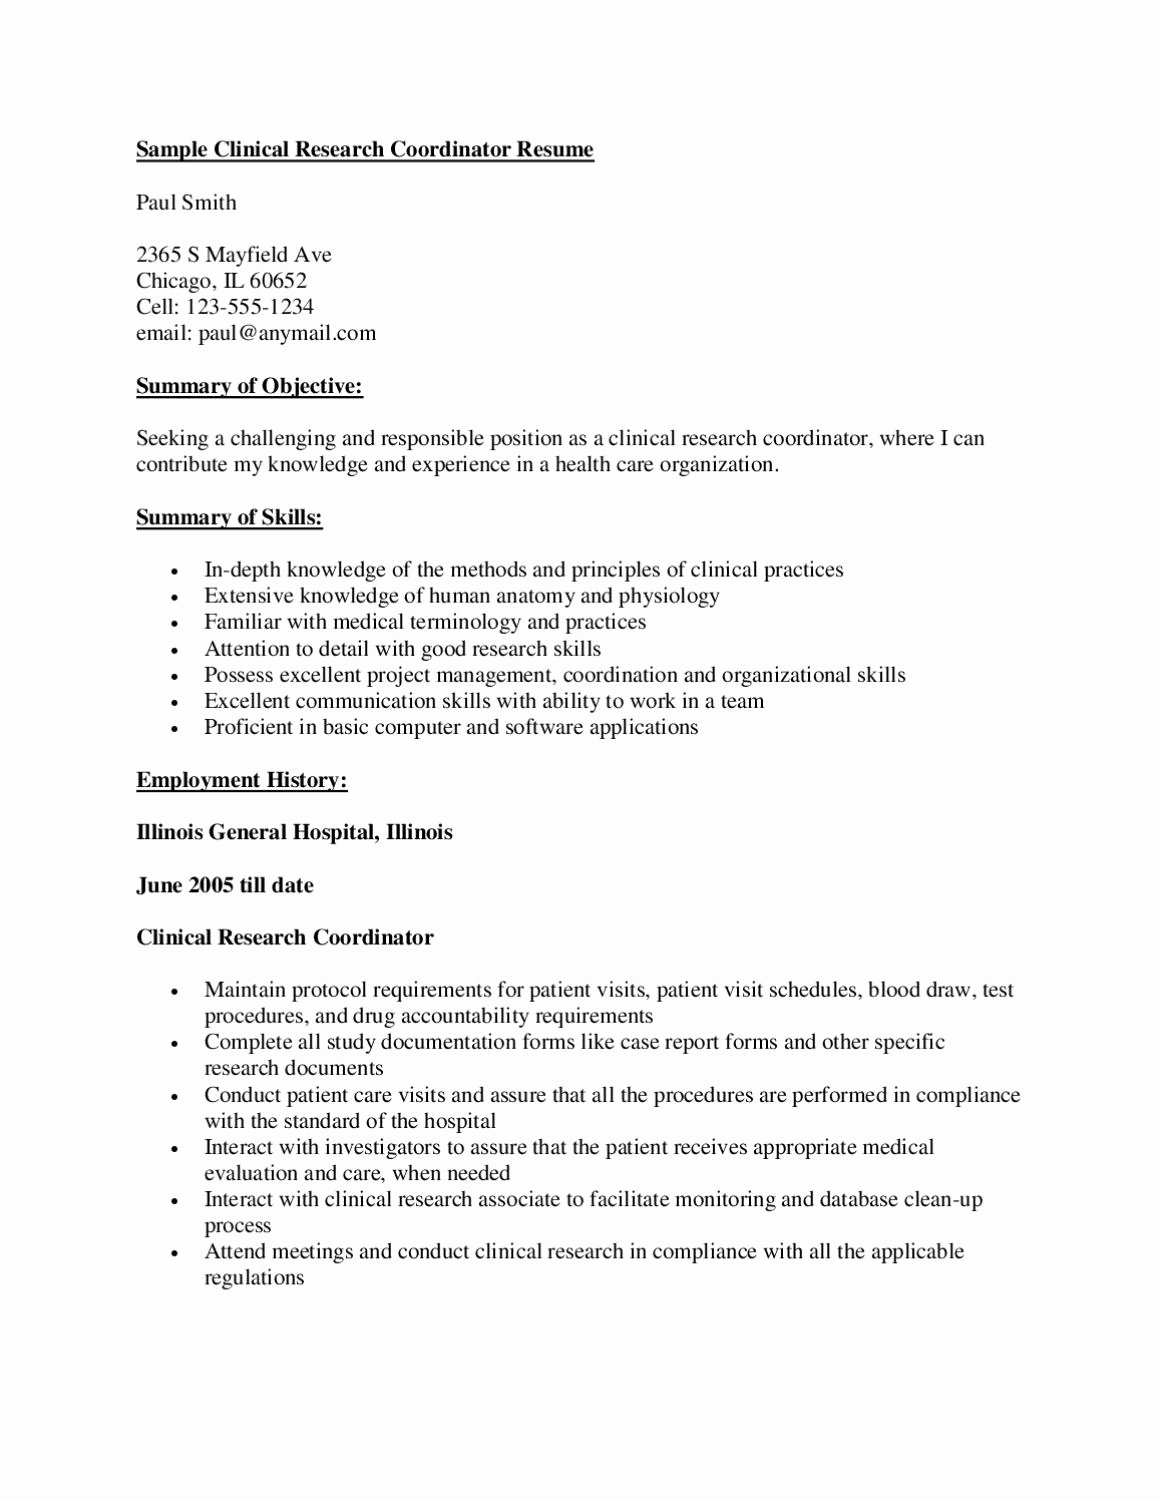 Sample Crc Resume by Pharma Student issuu